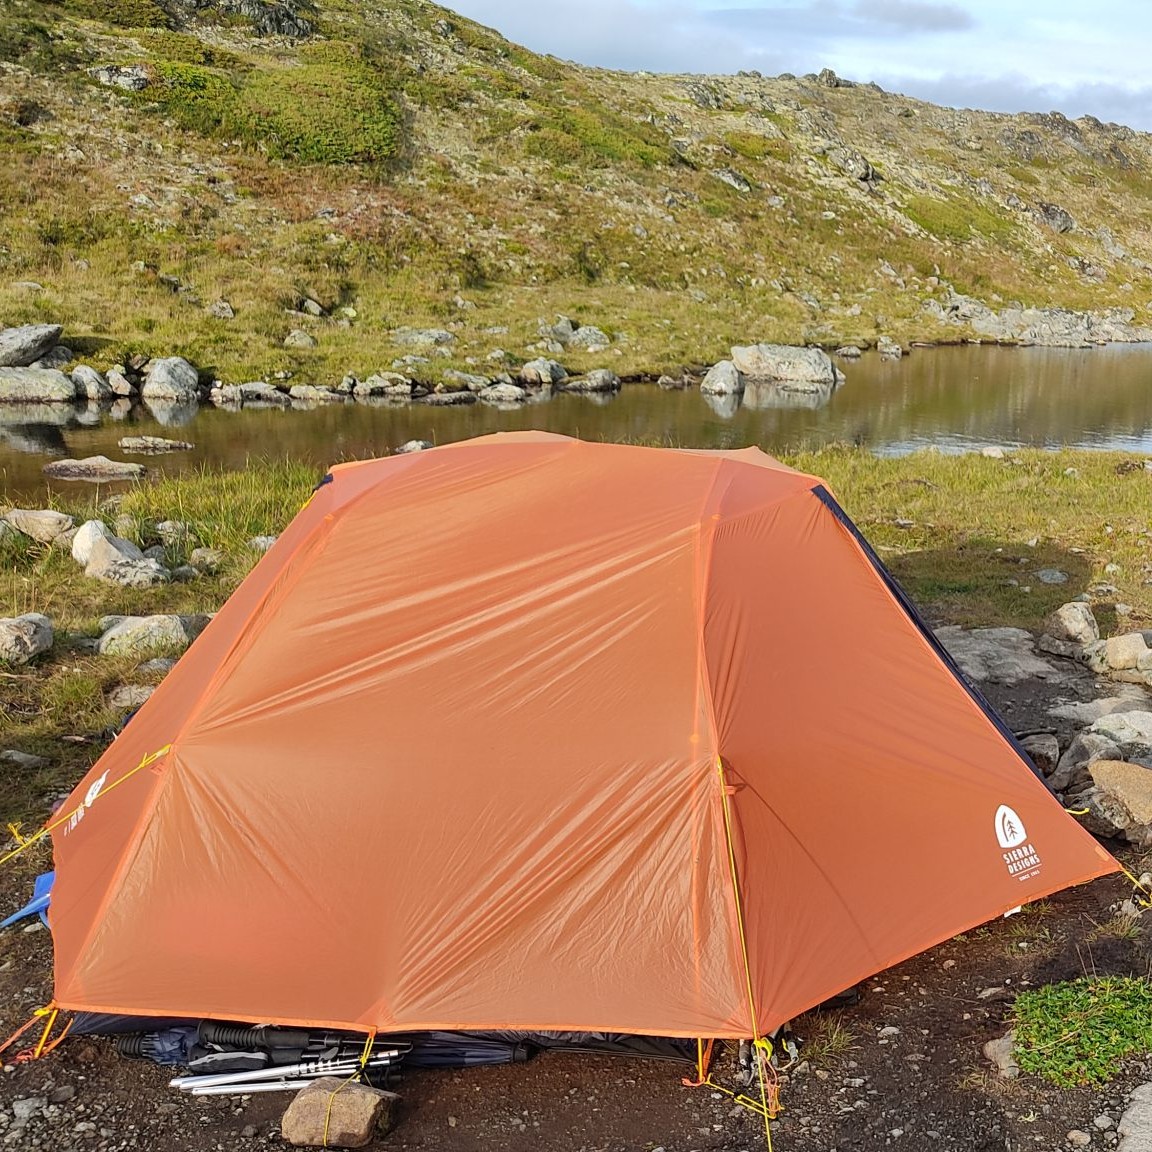 Sierra Designs Litehouse 2 Ultralight Backpacking Tent